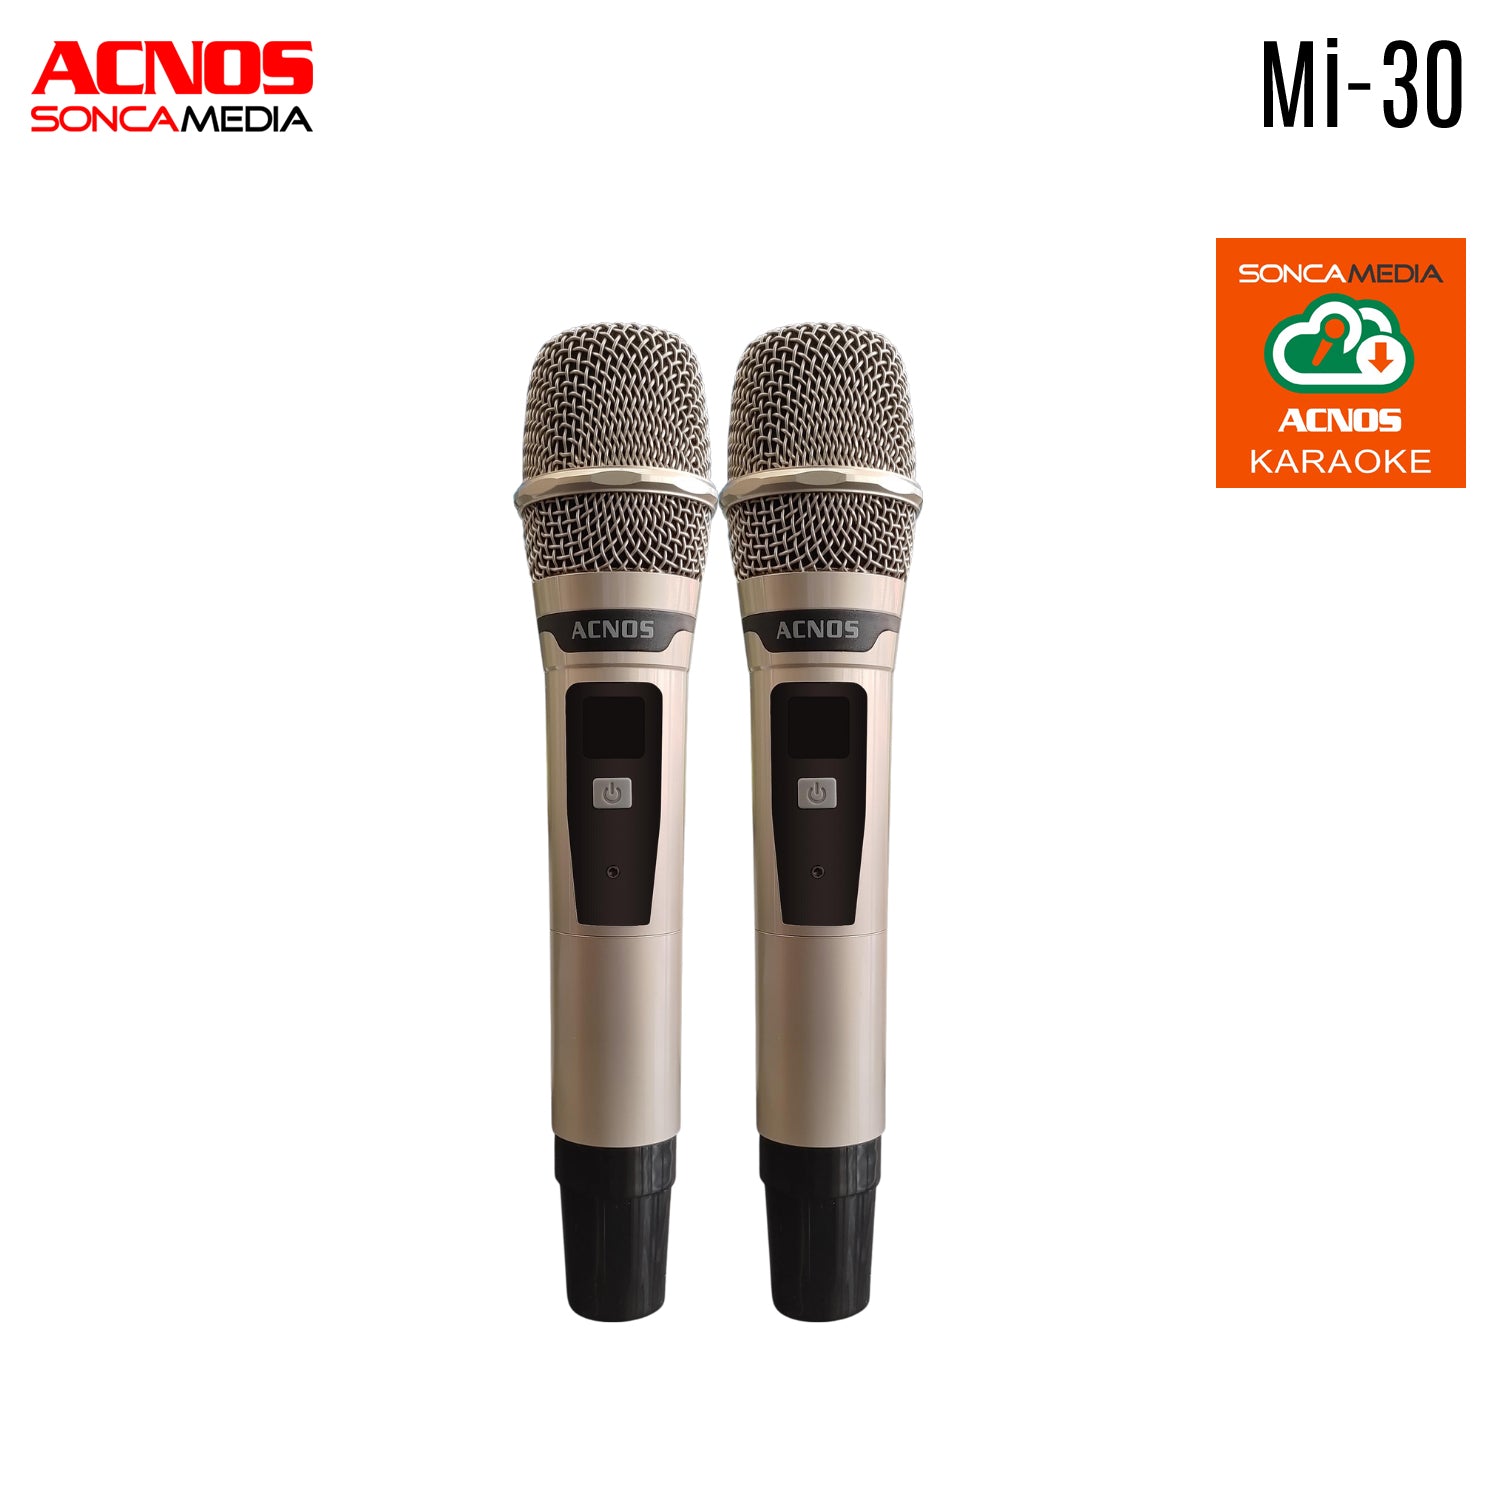 ACNOS Mi-30 Compact Portable Karaoke Mixer + 2 UHF Wireless Microphones + Carry Bag - Karaoke Home Entertainment